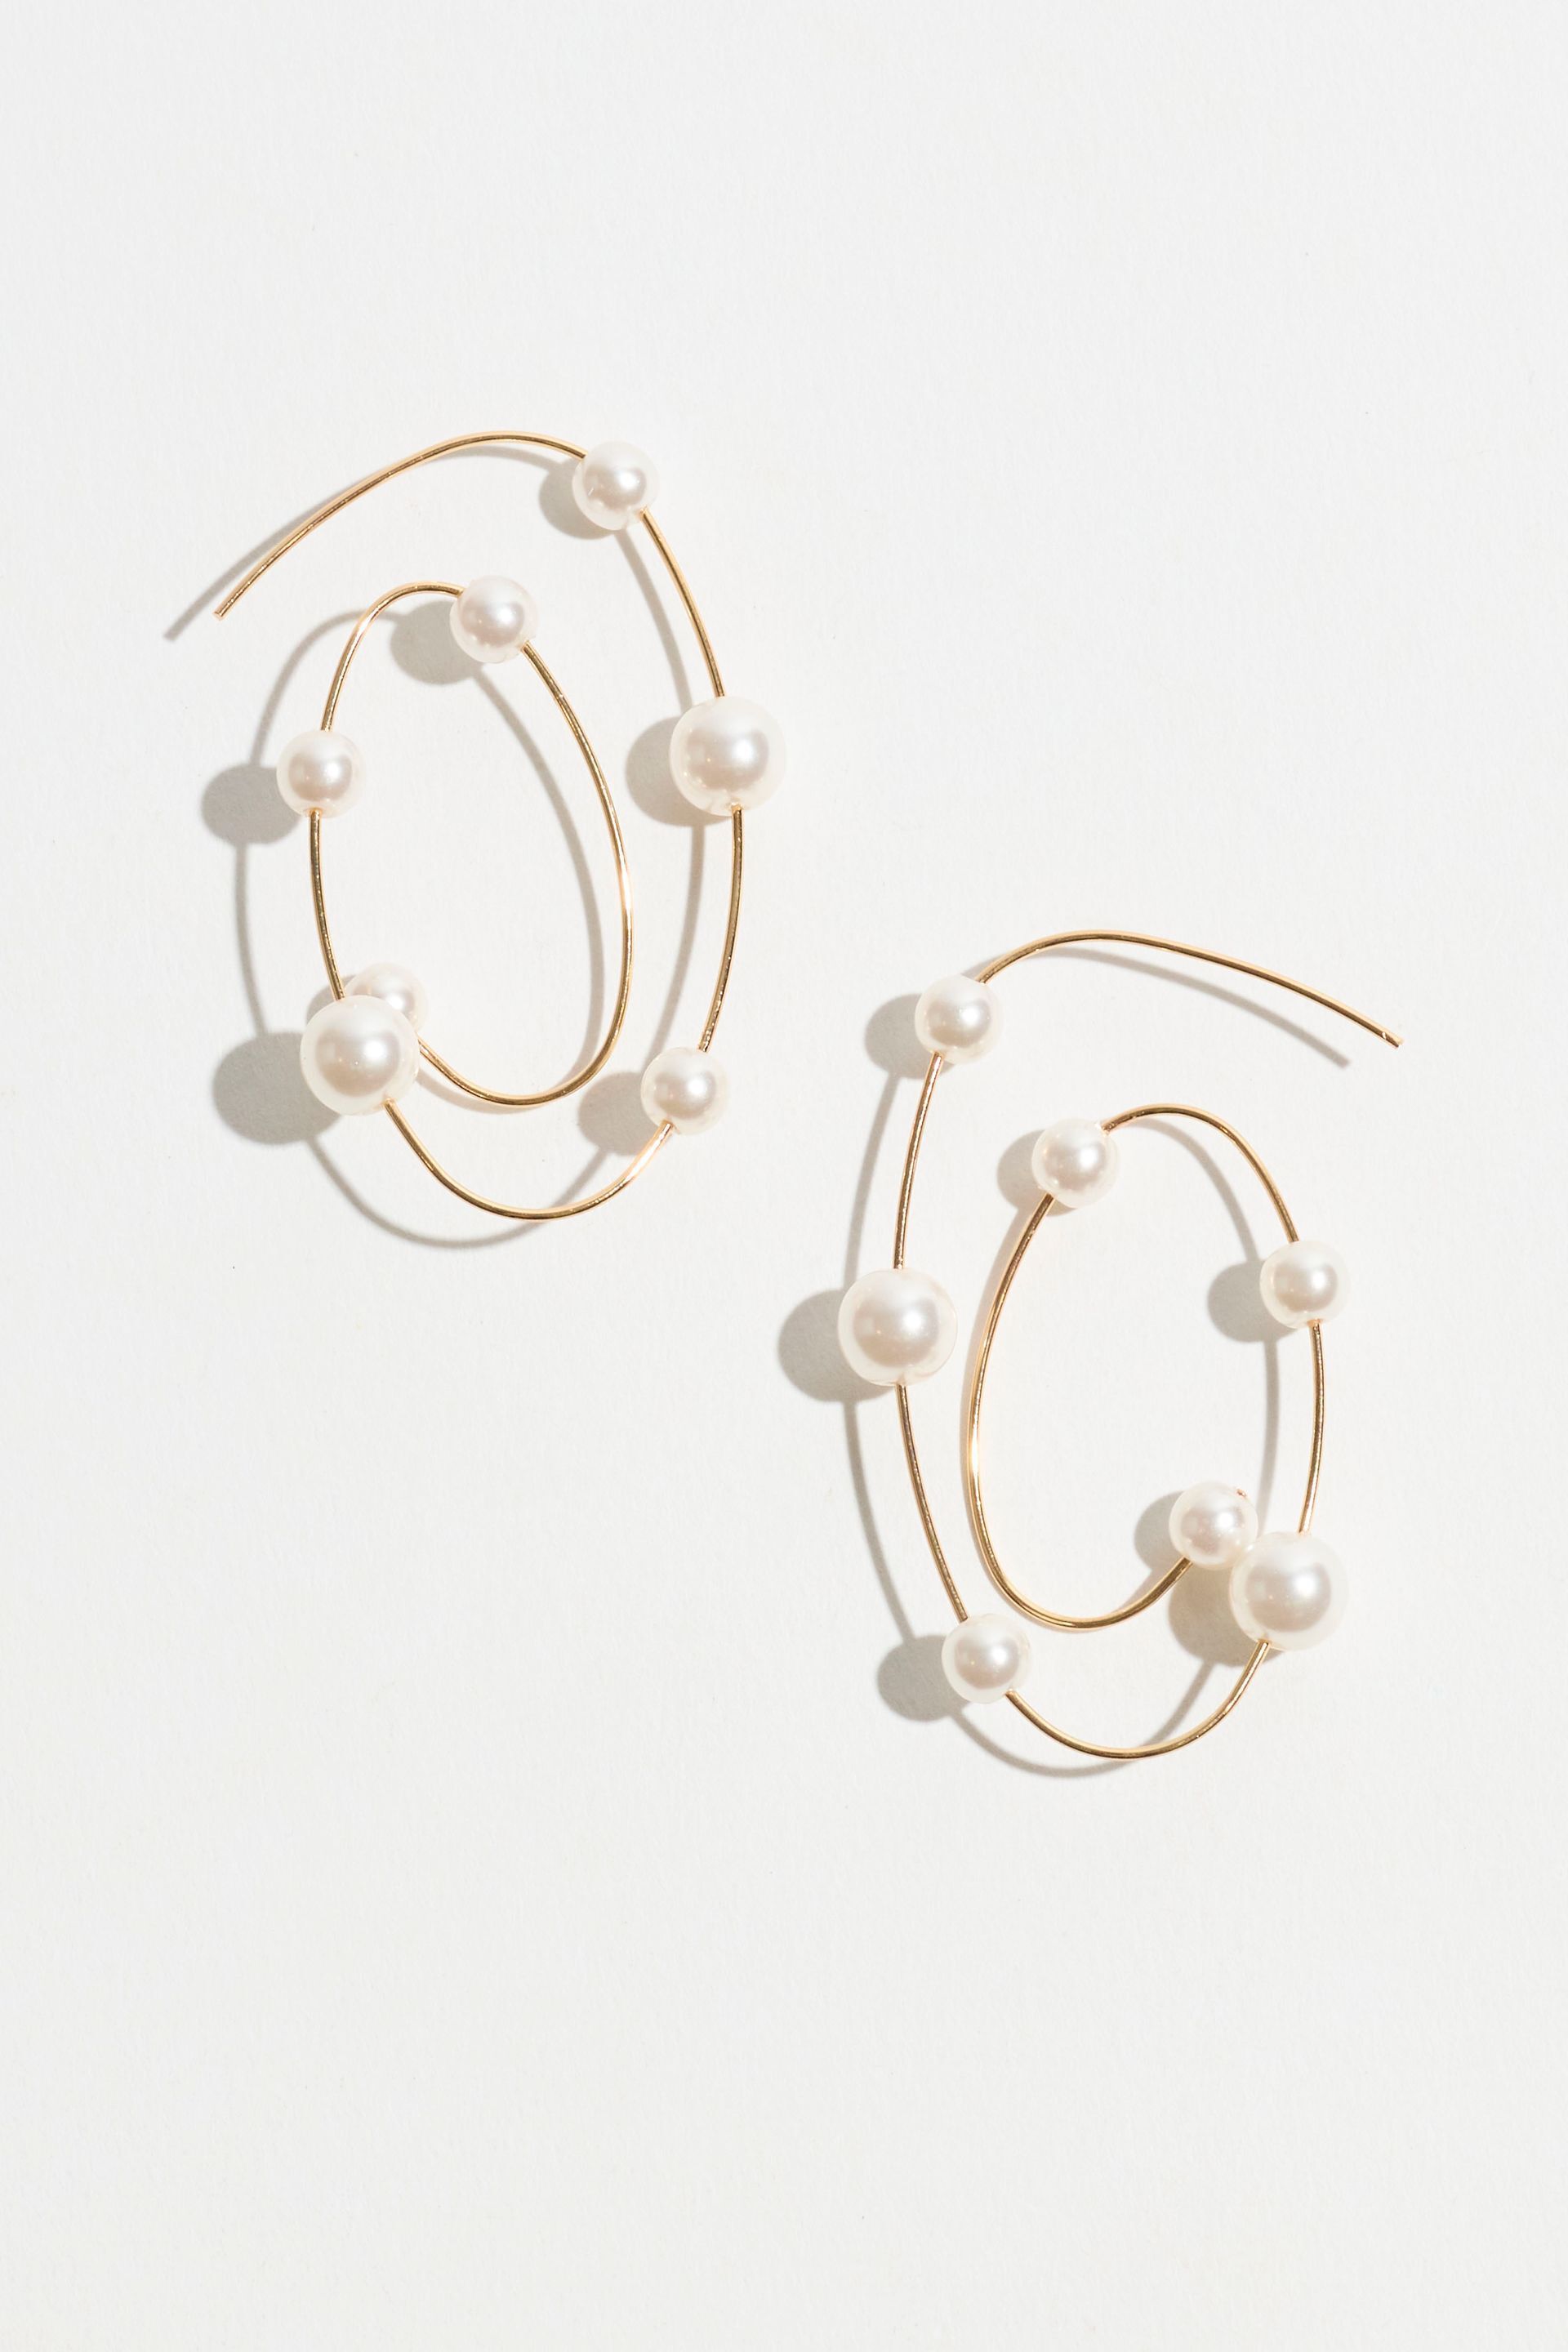 Orbiting Wire Pearl Earrings